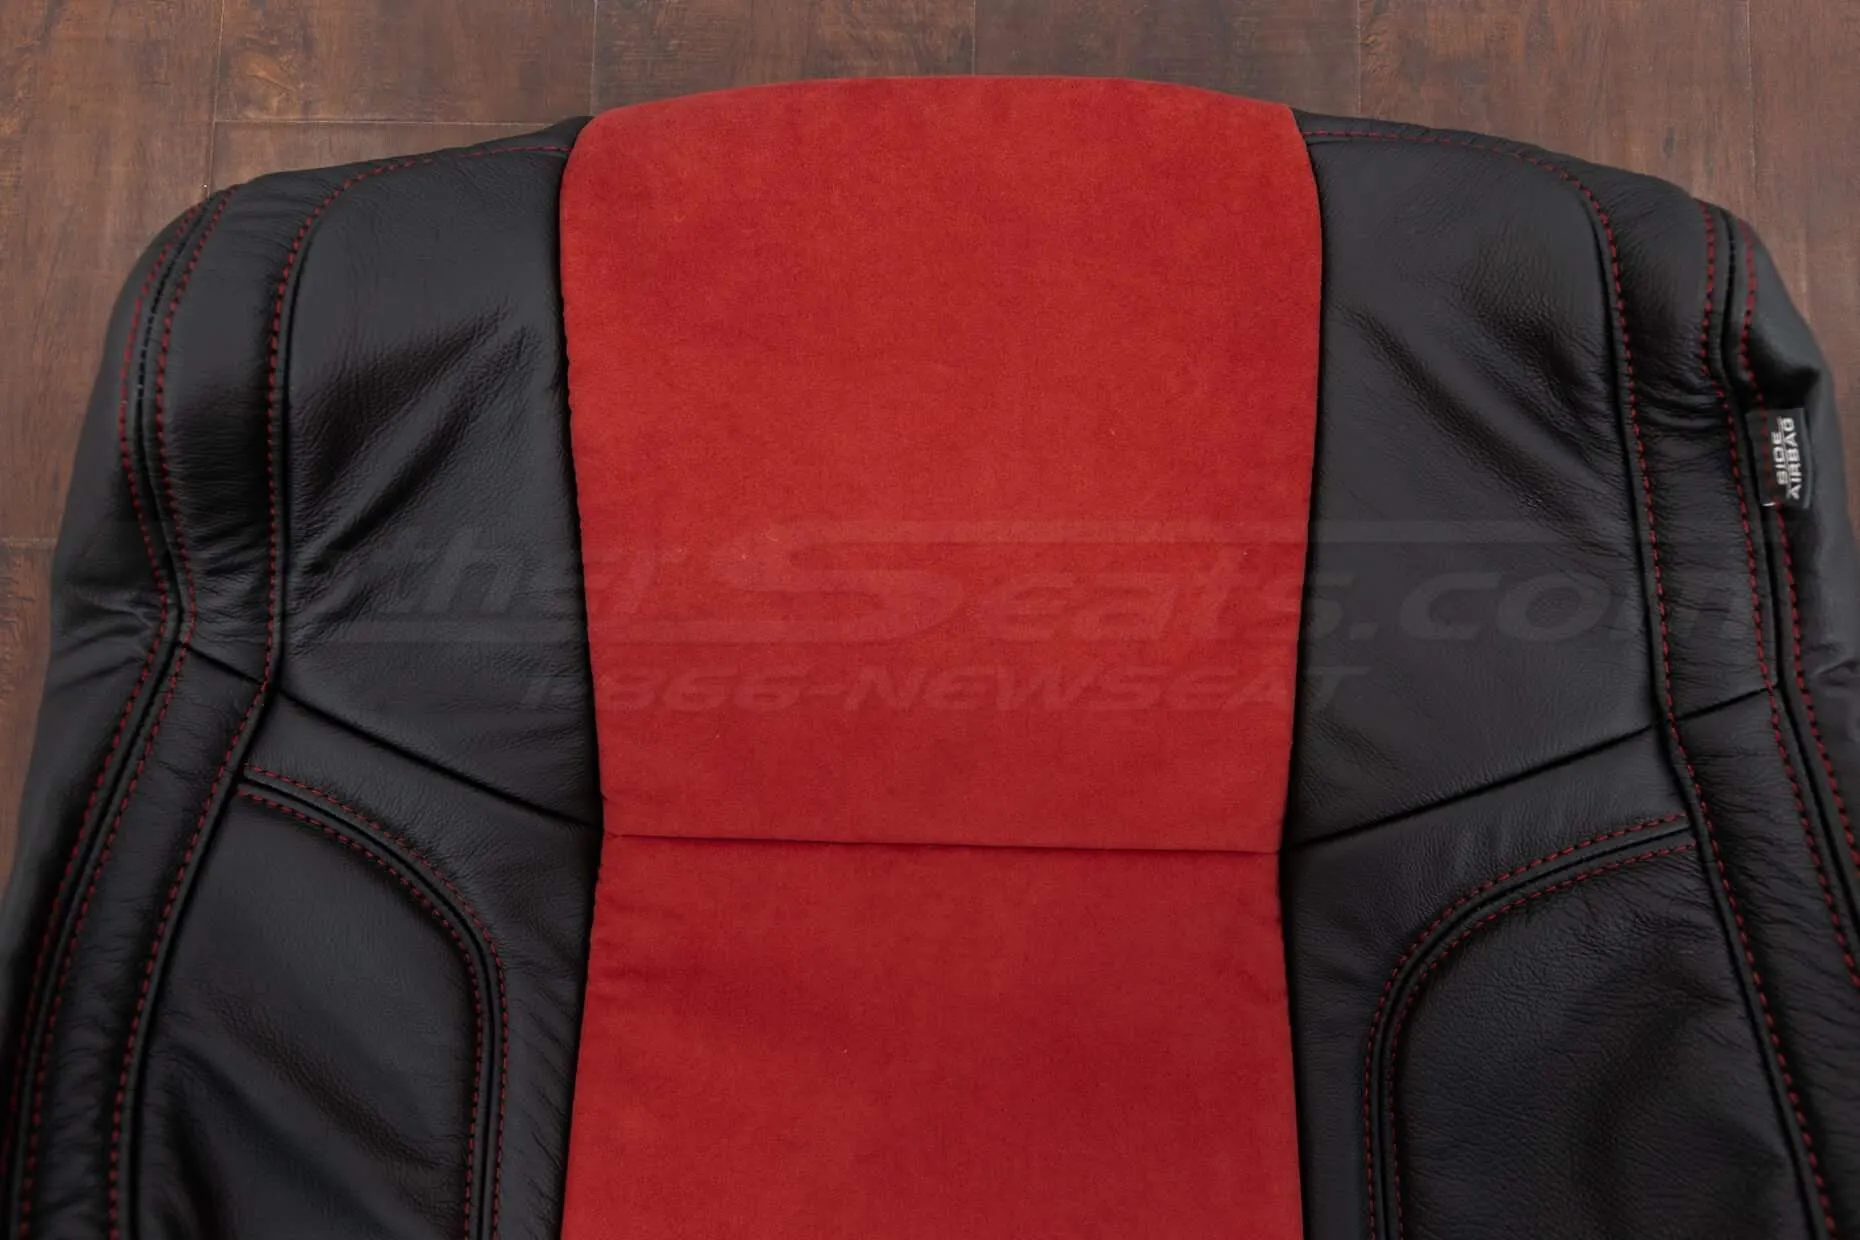 2015-2021 Dodge Challenger Upholstery Kit - Black w/ Red Suede - Front backrest close-up